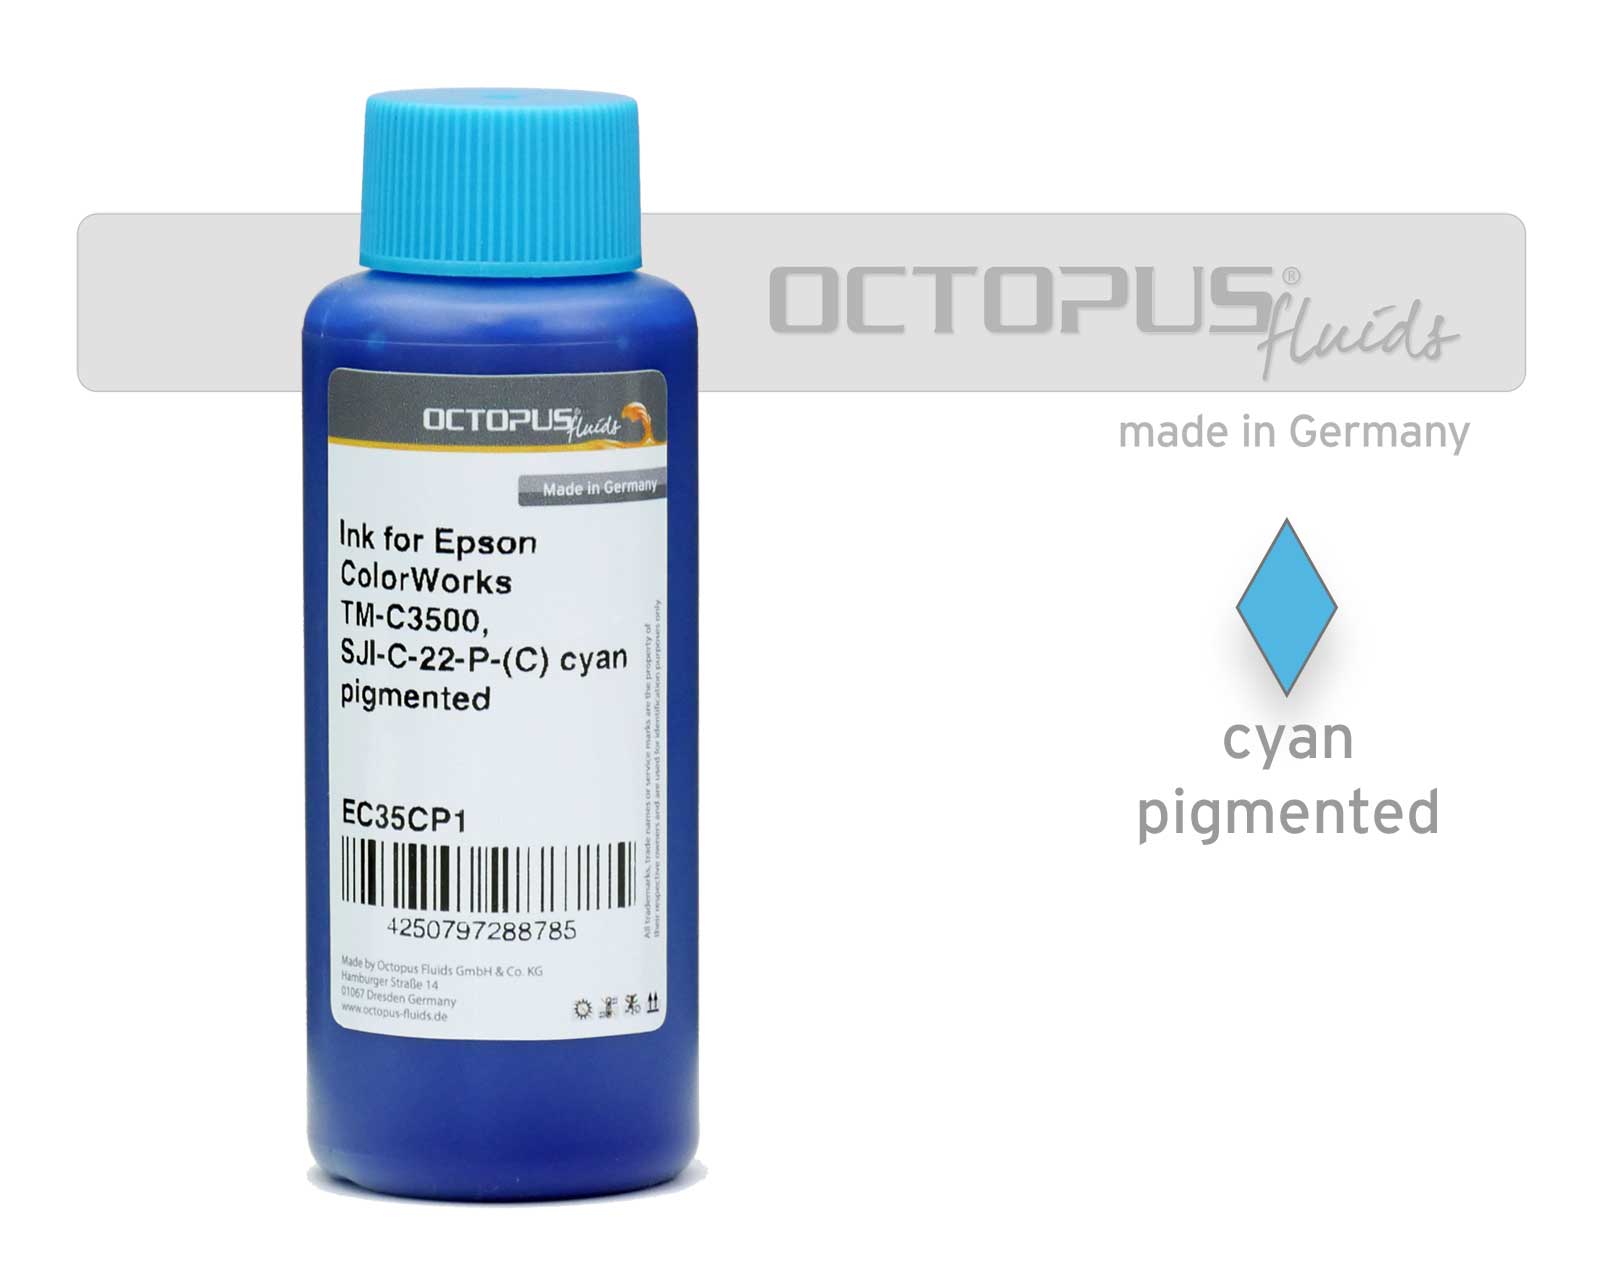 Refill ink for Epson ColorWorks TM-C3500, SJI-C-22-P-(C) cyan